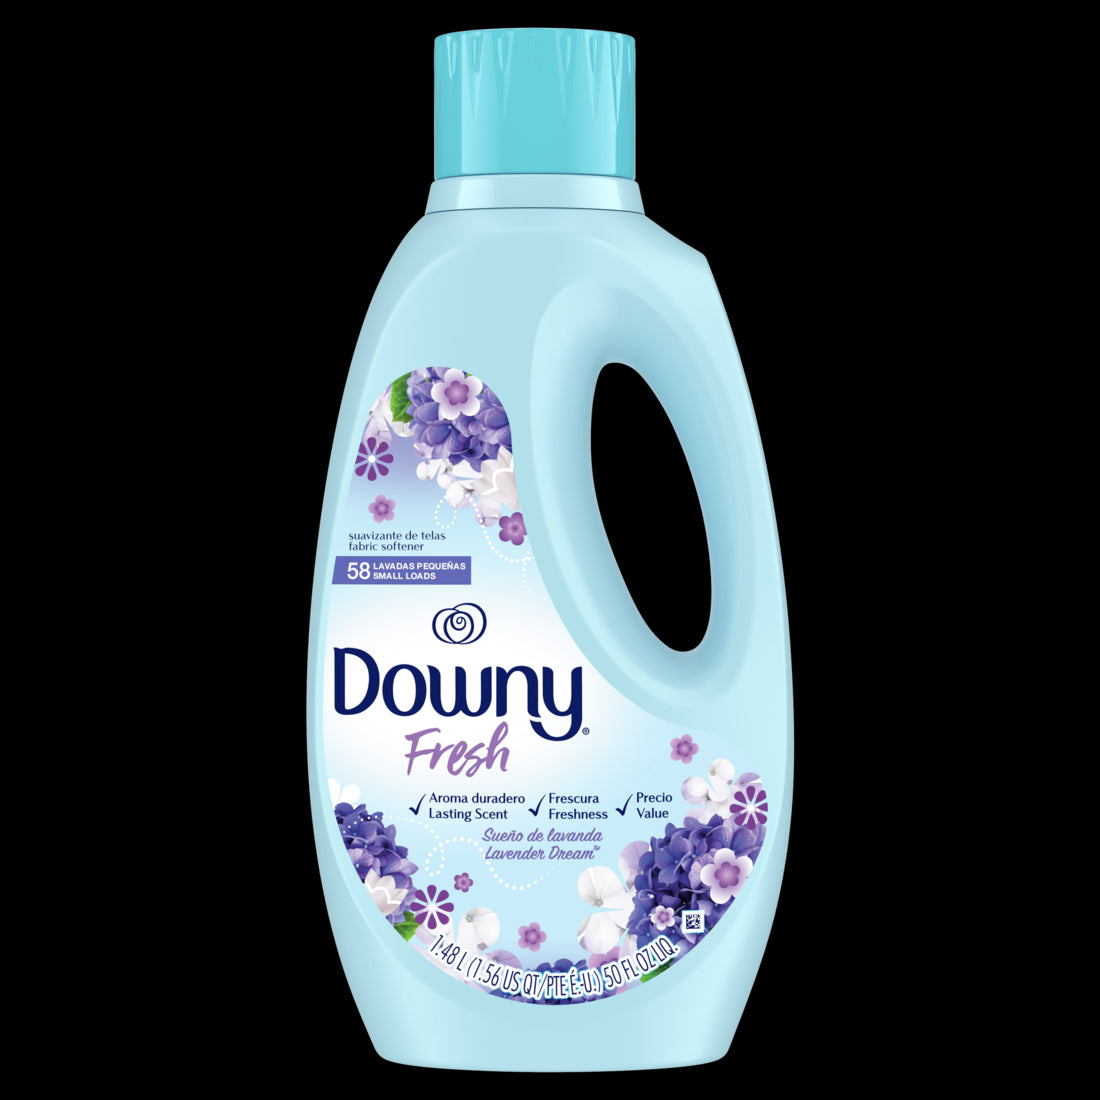 Downy Fresh Liquid Fabric Softener Lavender Dream 58 Loads - 50oz/4pk